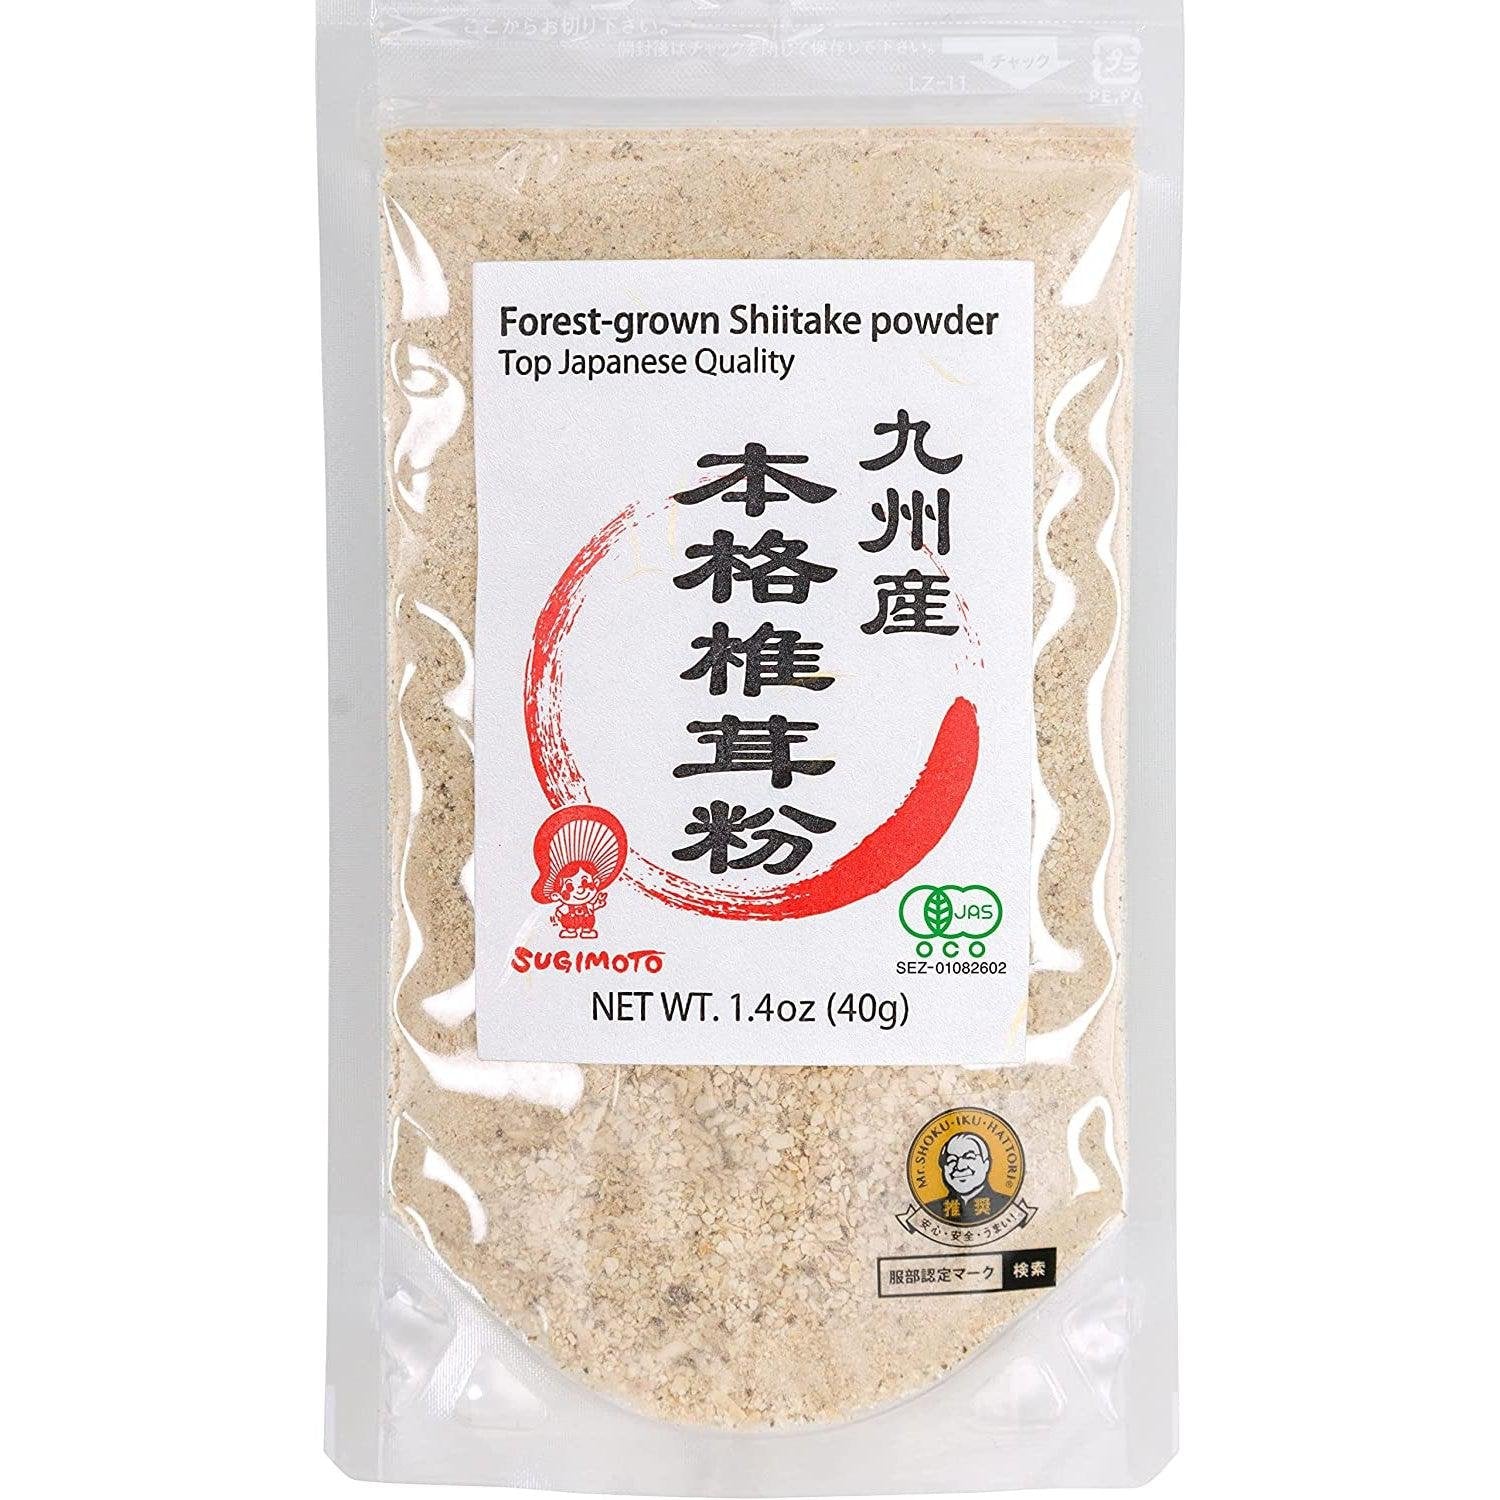 Sugimoto All-Purpose Organic Japanese Shiitake Mushroom Powder 40g